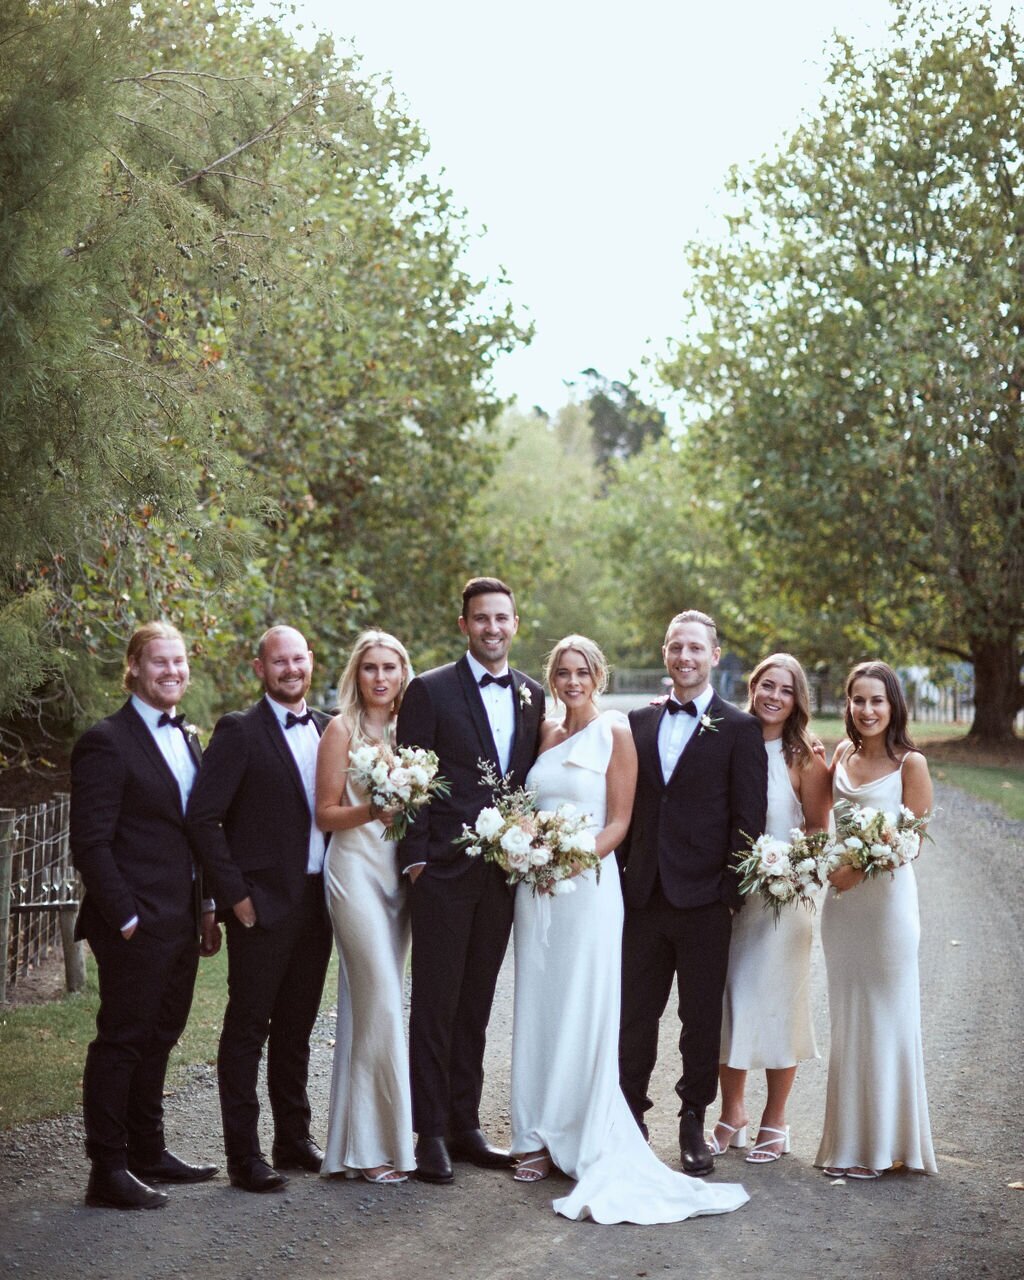 Our Brides | Lauren and Mark Wedding Journey